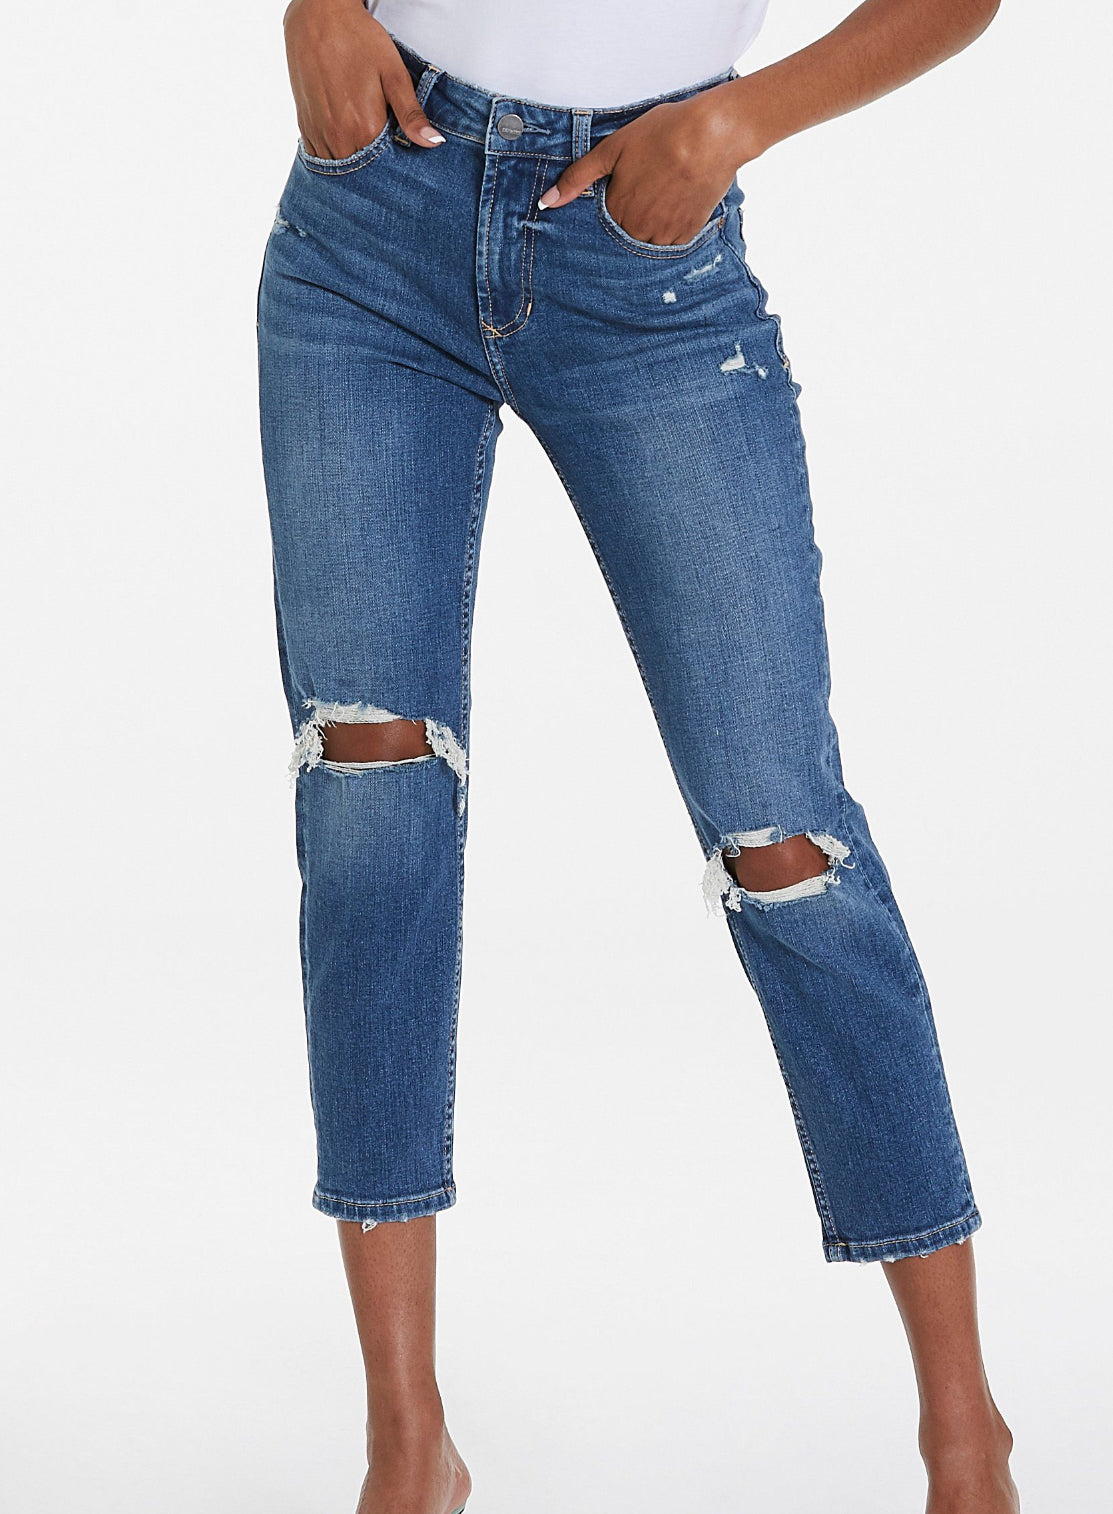 Roxie Bondi Beach Jeans